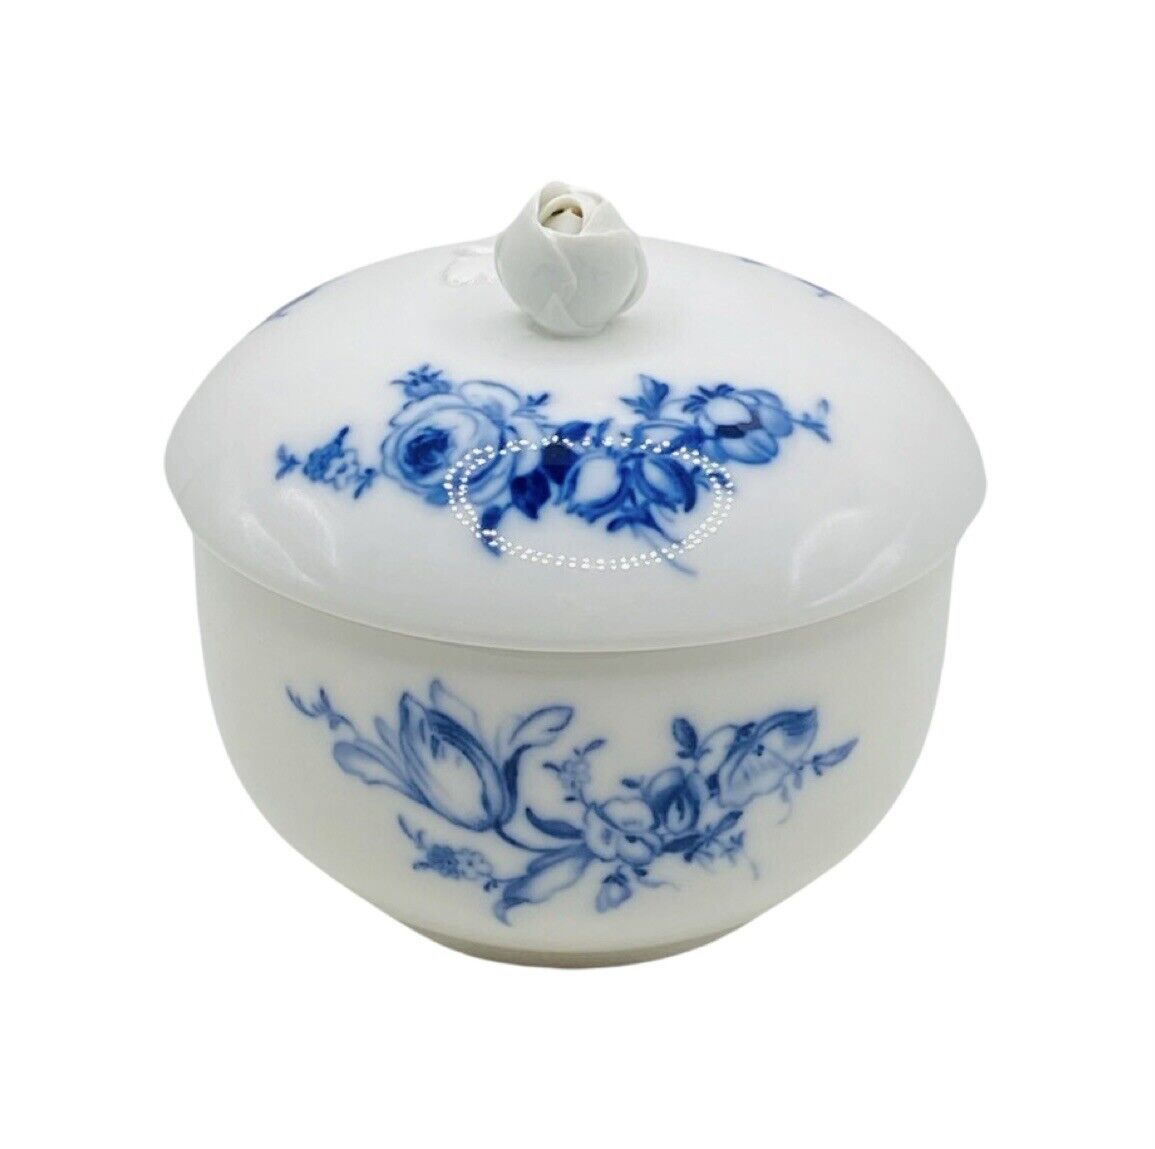 Antique Meissen Blue Floral Sugar Bowl with Lid Rose Blue & White Crossed Sword